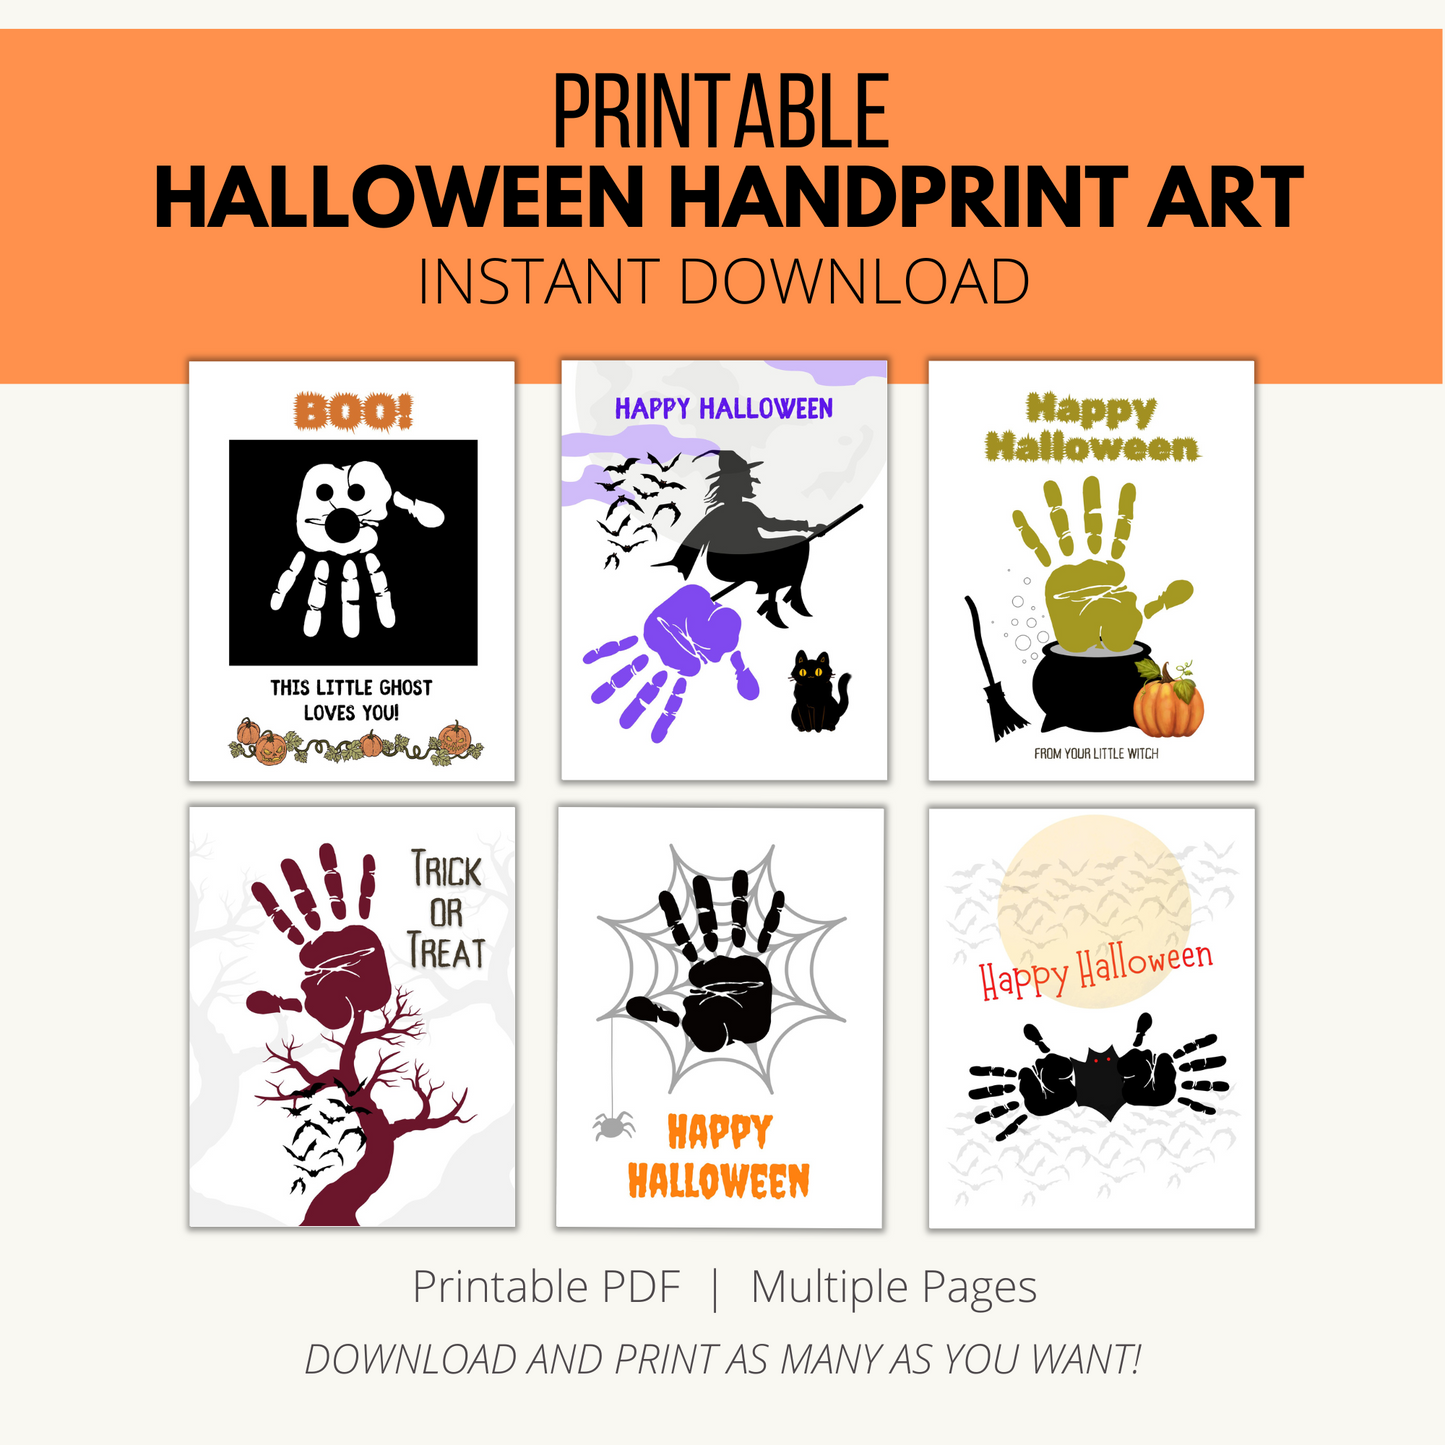 Printable Halloween Handprint Art 